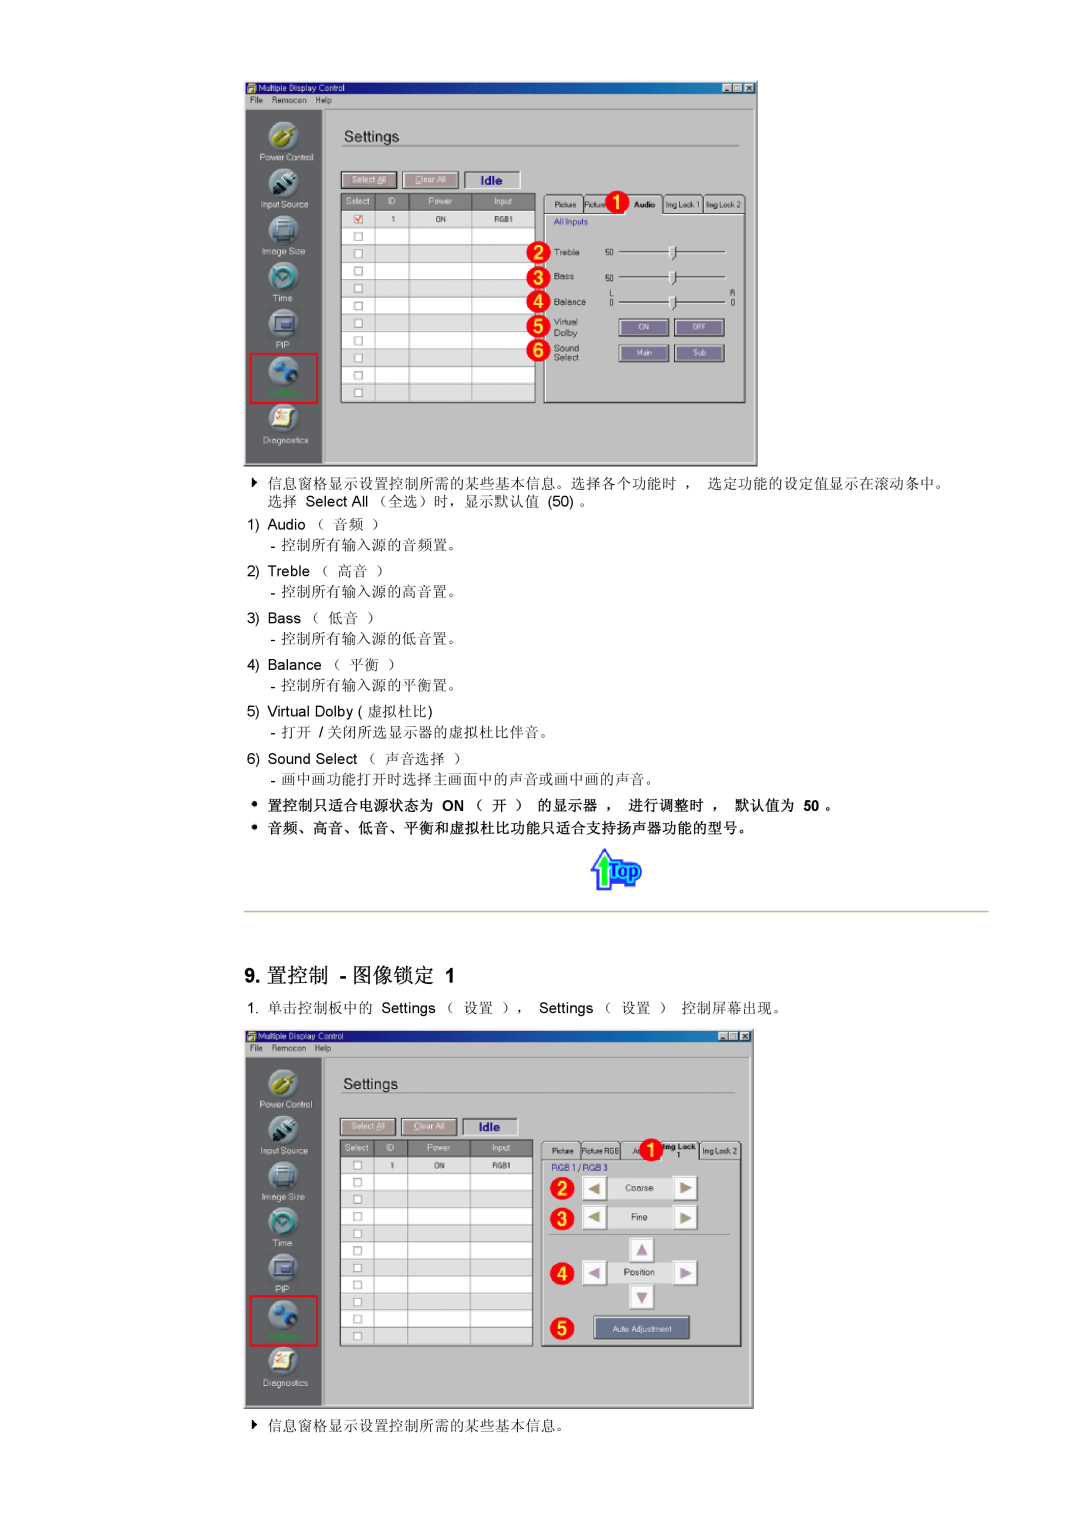 Samsung CK40PSNS/EDC 9. 置控制 - 图像锁定, Audio （ 音频 ）, Treble （ 高音 ）, Balance （ 平衡 ）, Virtual Dolby 虚拟杜比, Sound Select （ 声音选择 ） 